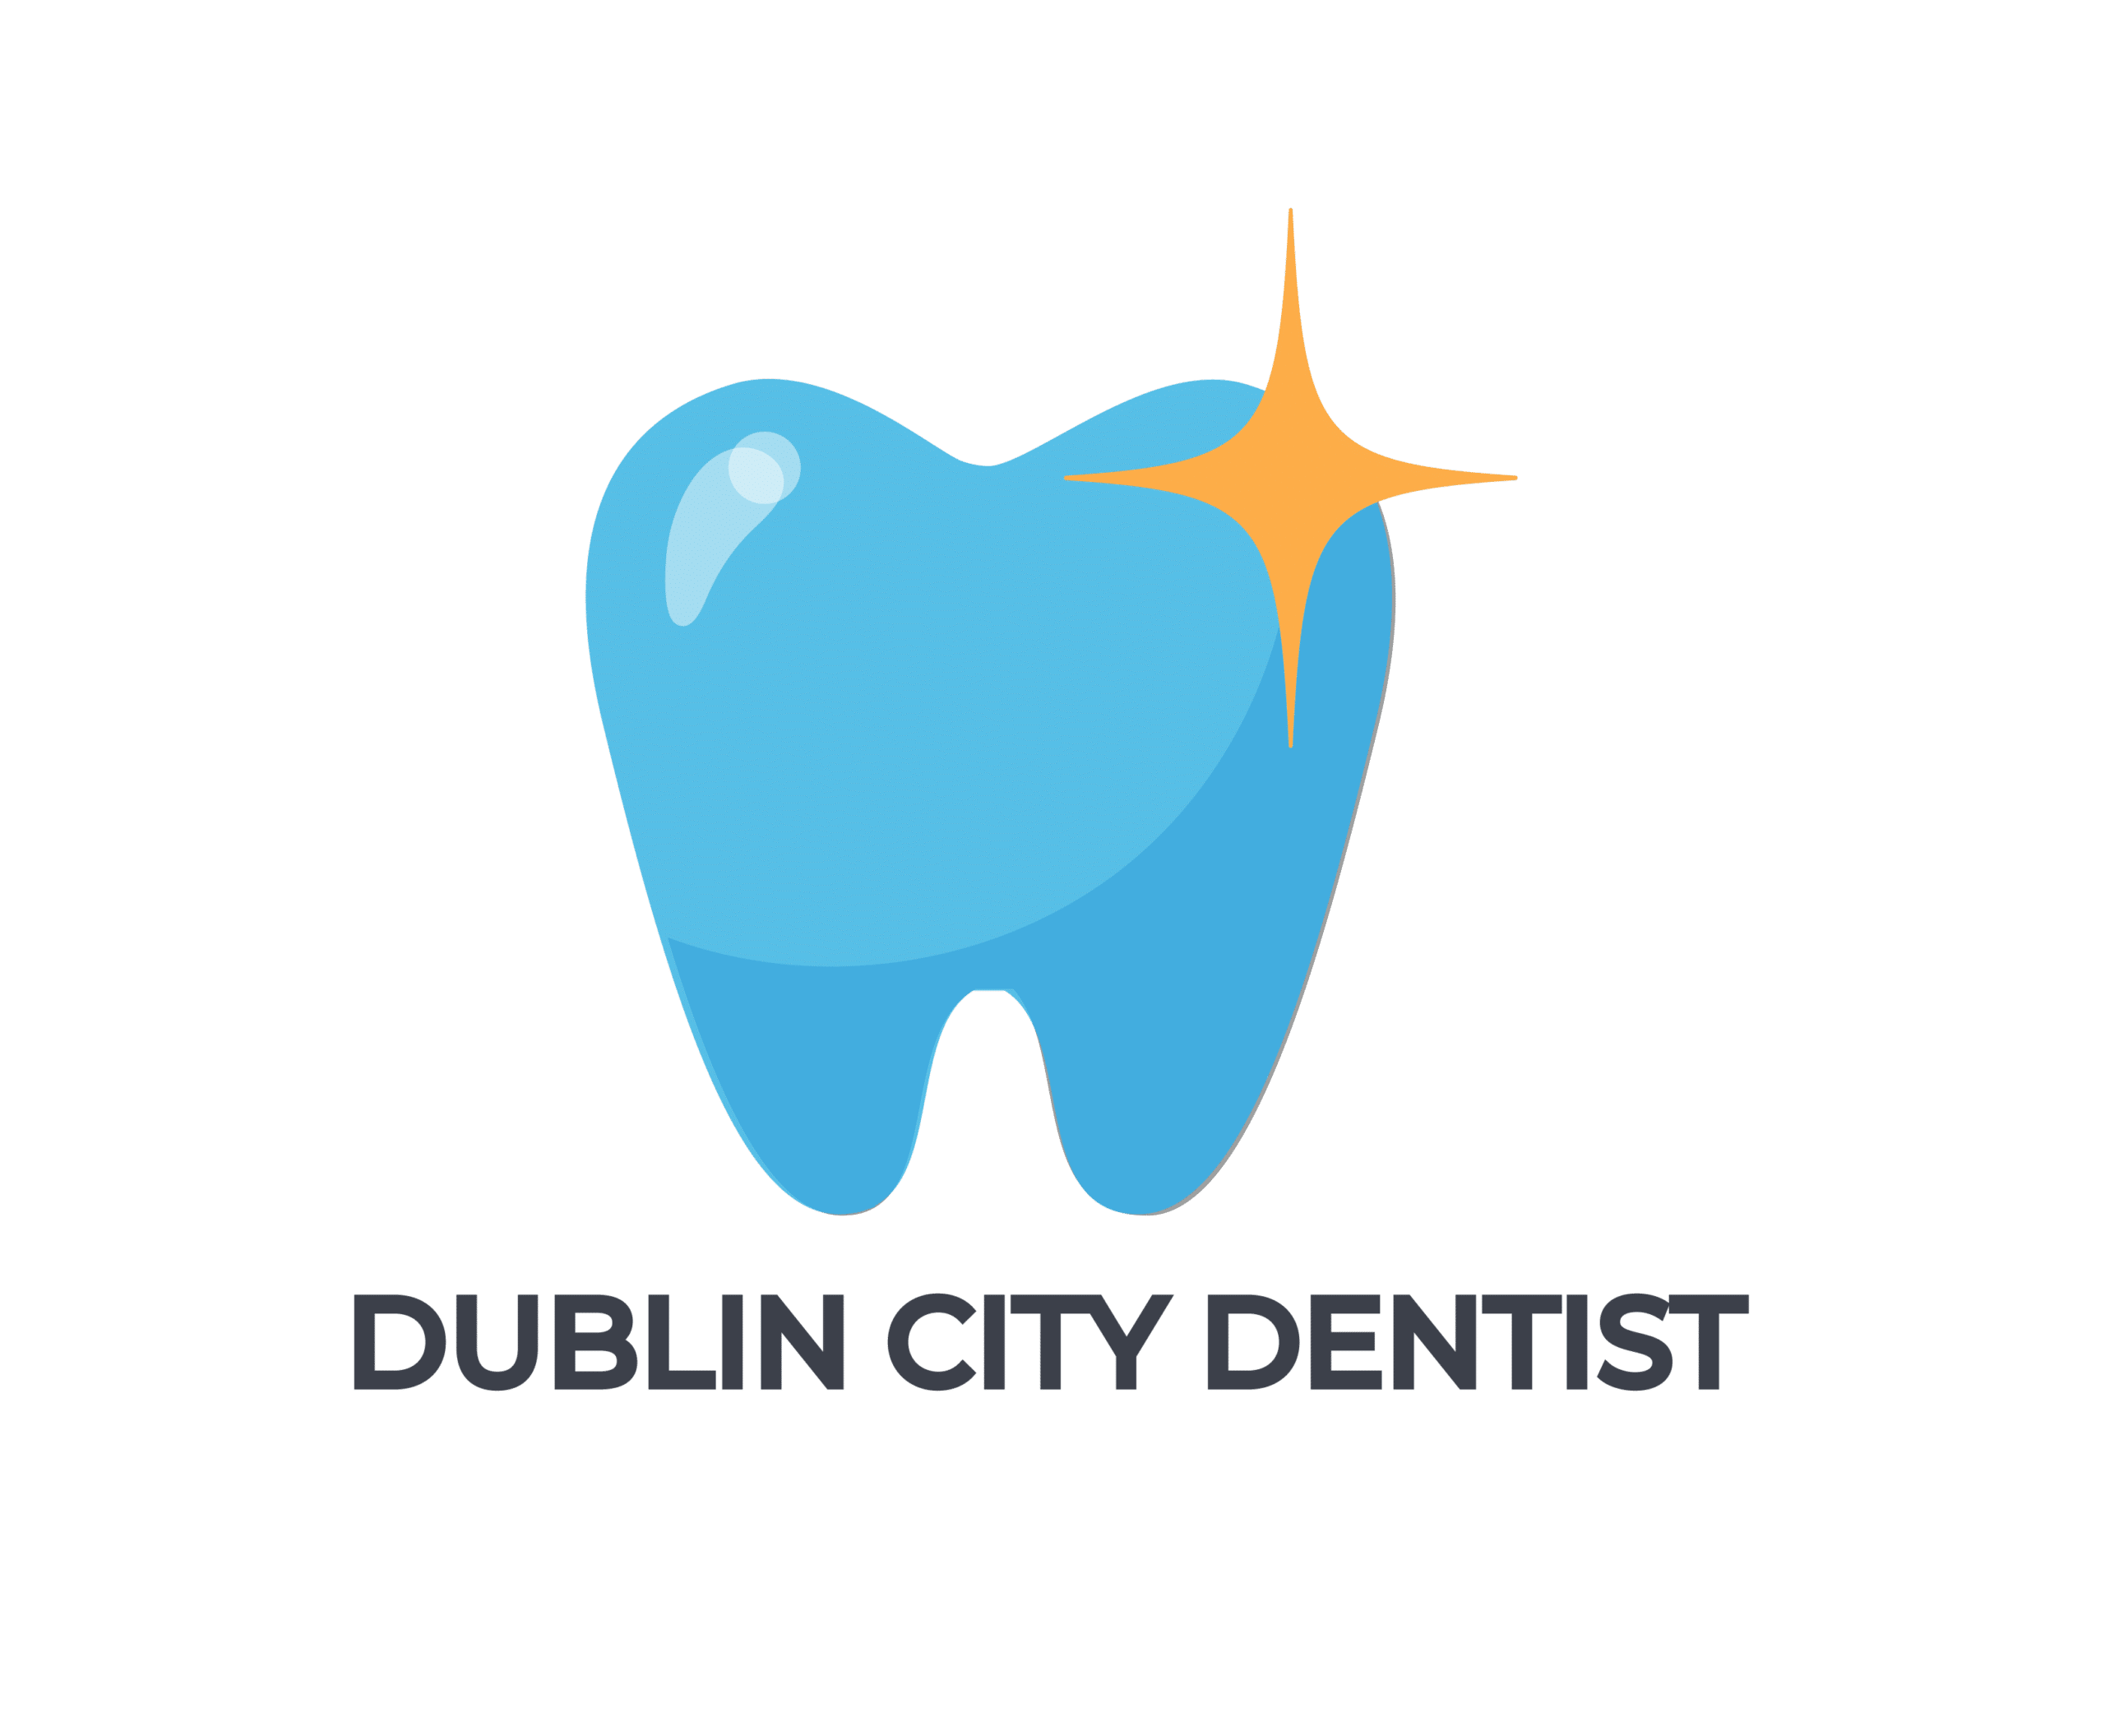 DUBLIN CITY DENTIST logo